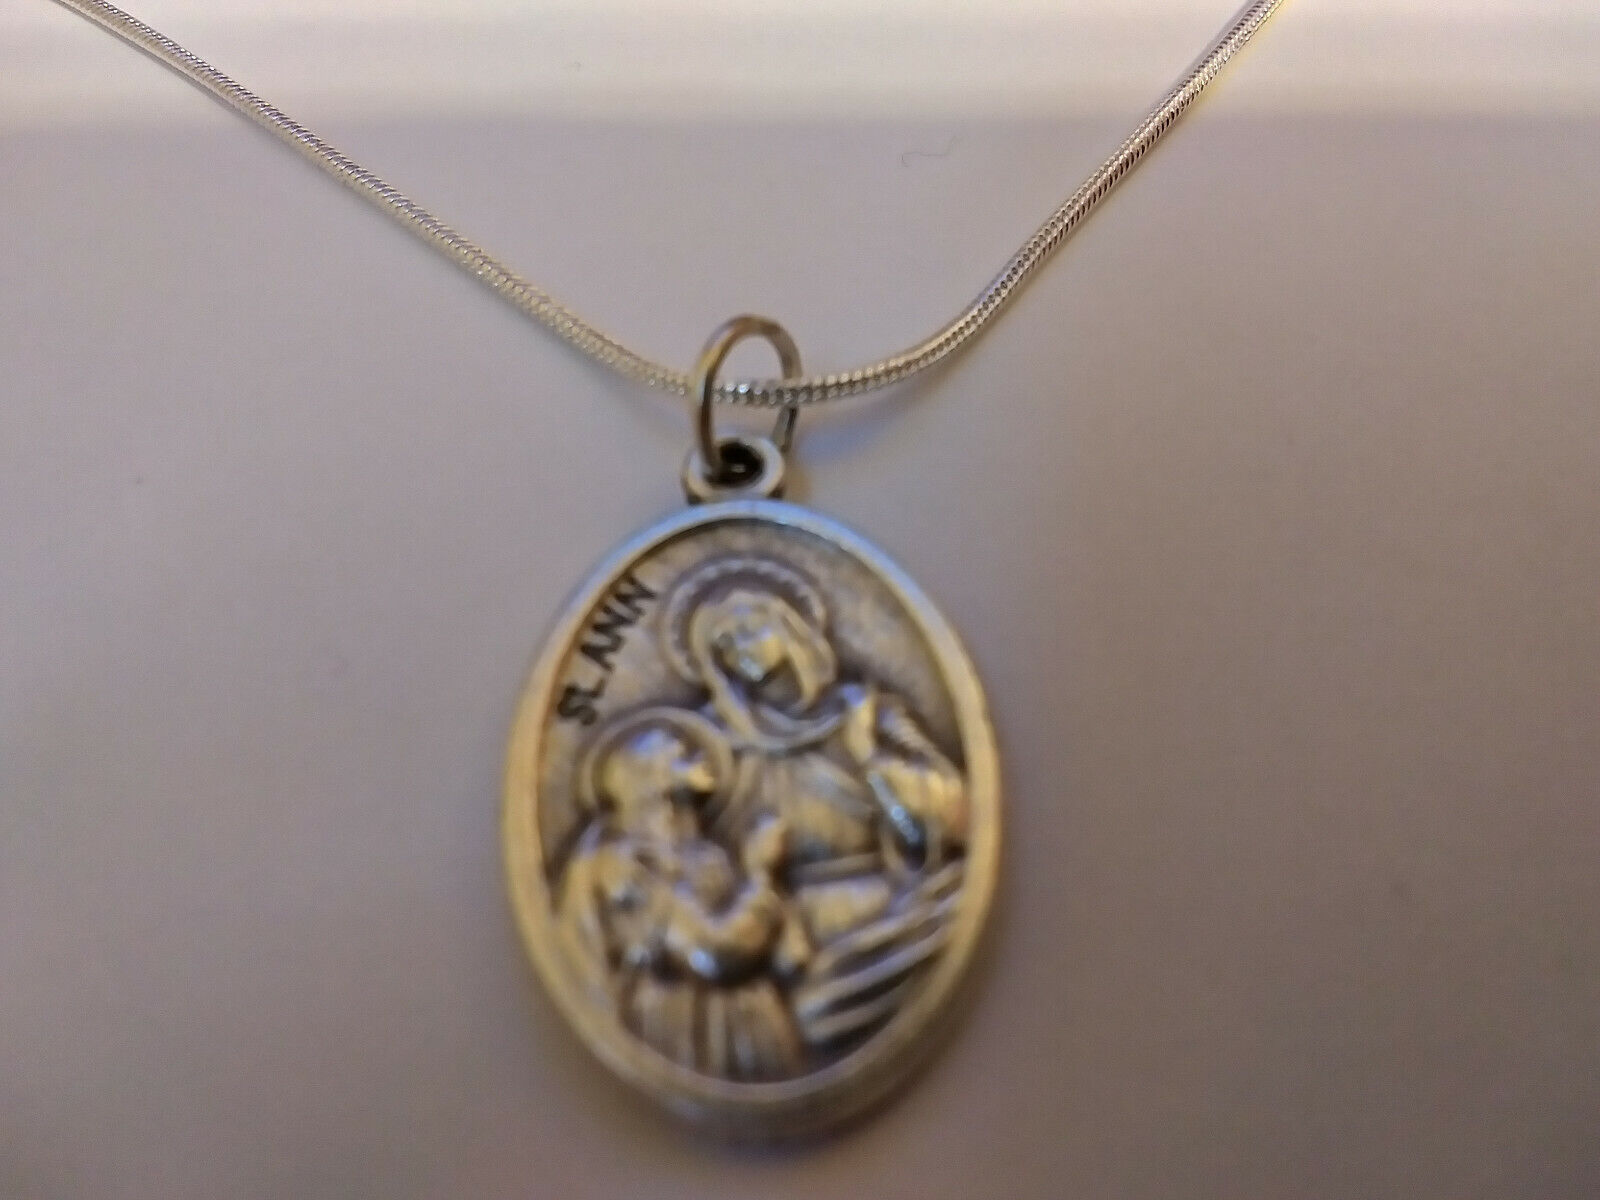 St Saint Ann Anne medal 925 sterling silver chain necklace + prayer card lot